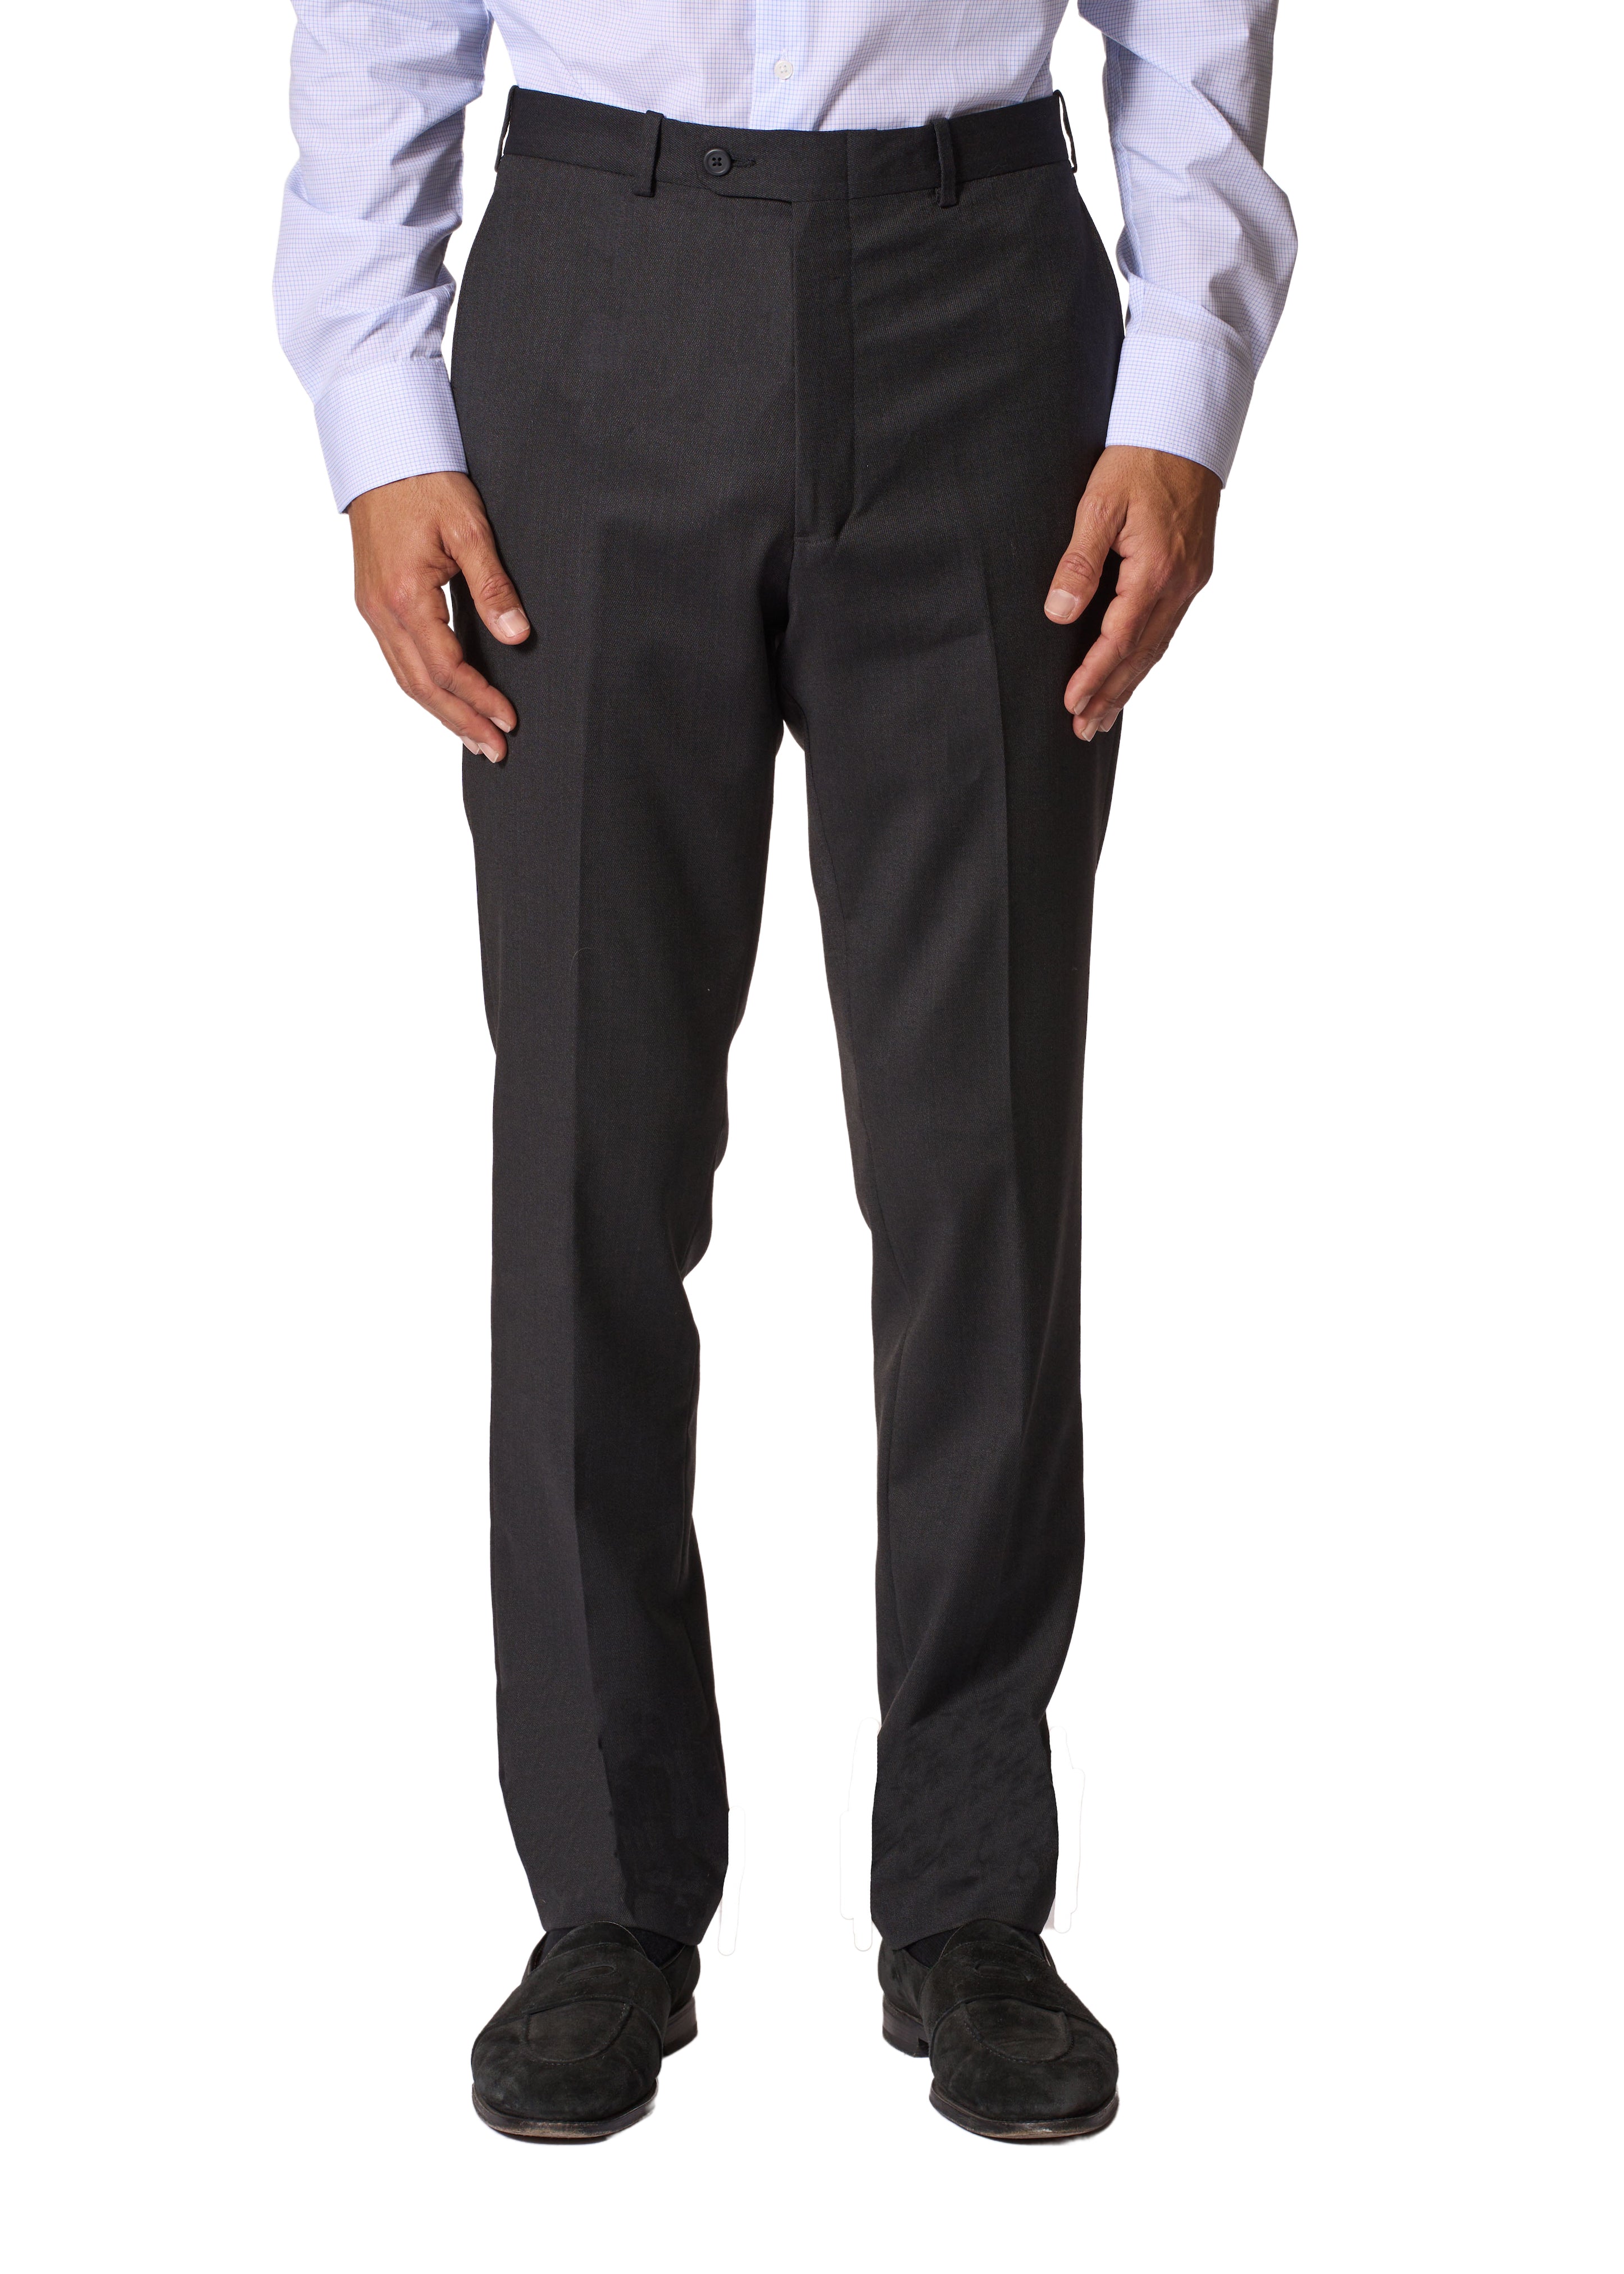 Calvin Klein Womens Size 16 Business Dress Pants Charcoal Grey | eBay